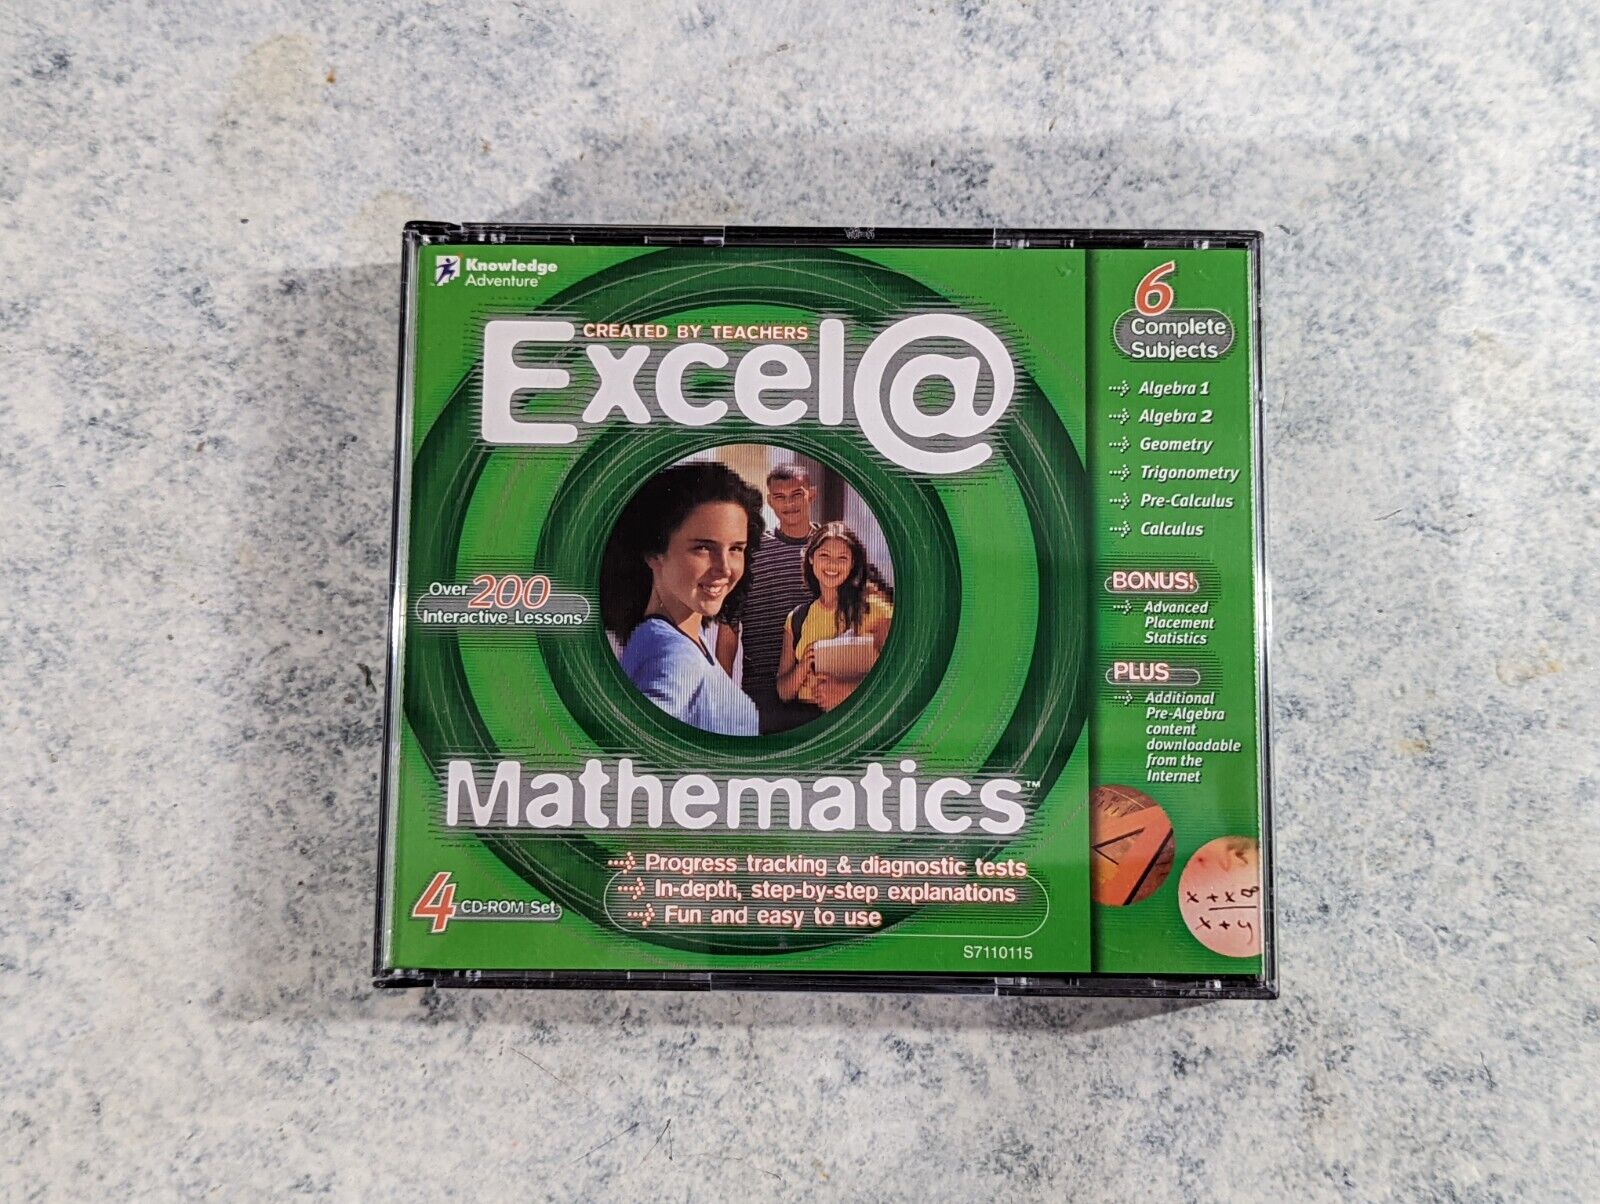 Knowledge Adventure Excel @ Mathematics 4 CD-ROM Set Algebra Trig Pre Calculus